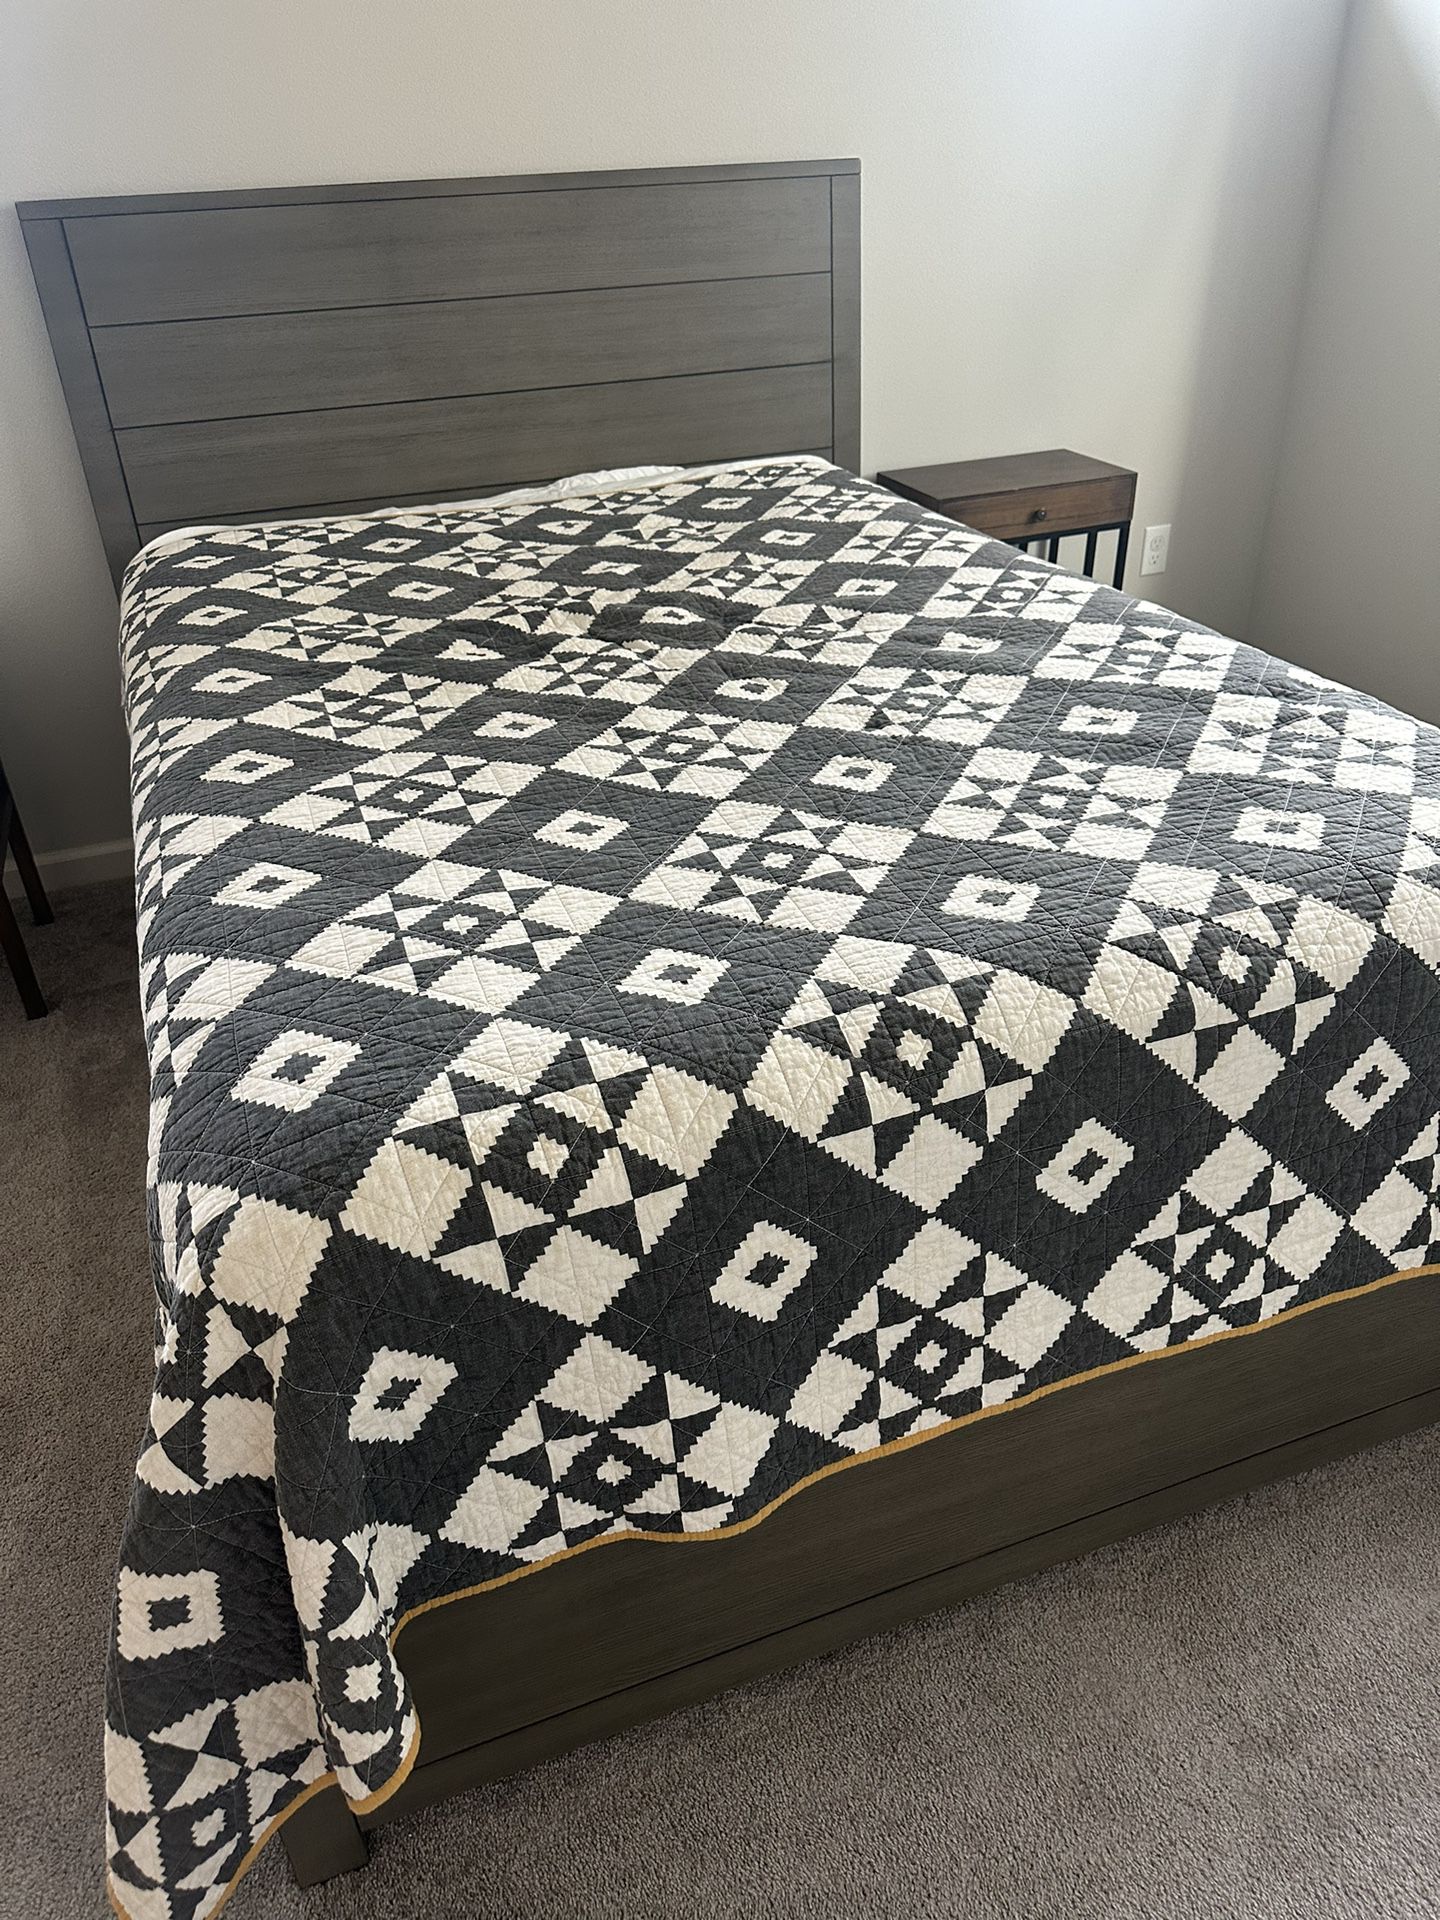 Full size Bed frame and/or Serta Perfect Sleeper Wynstone II mattress